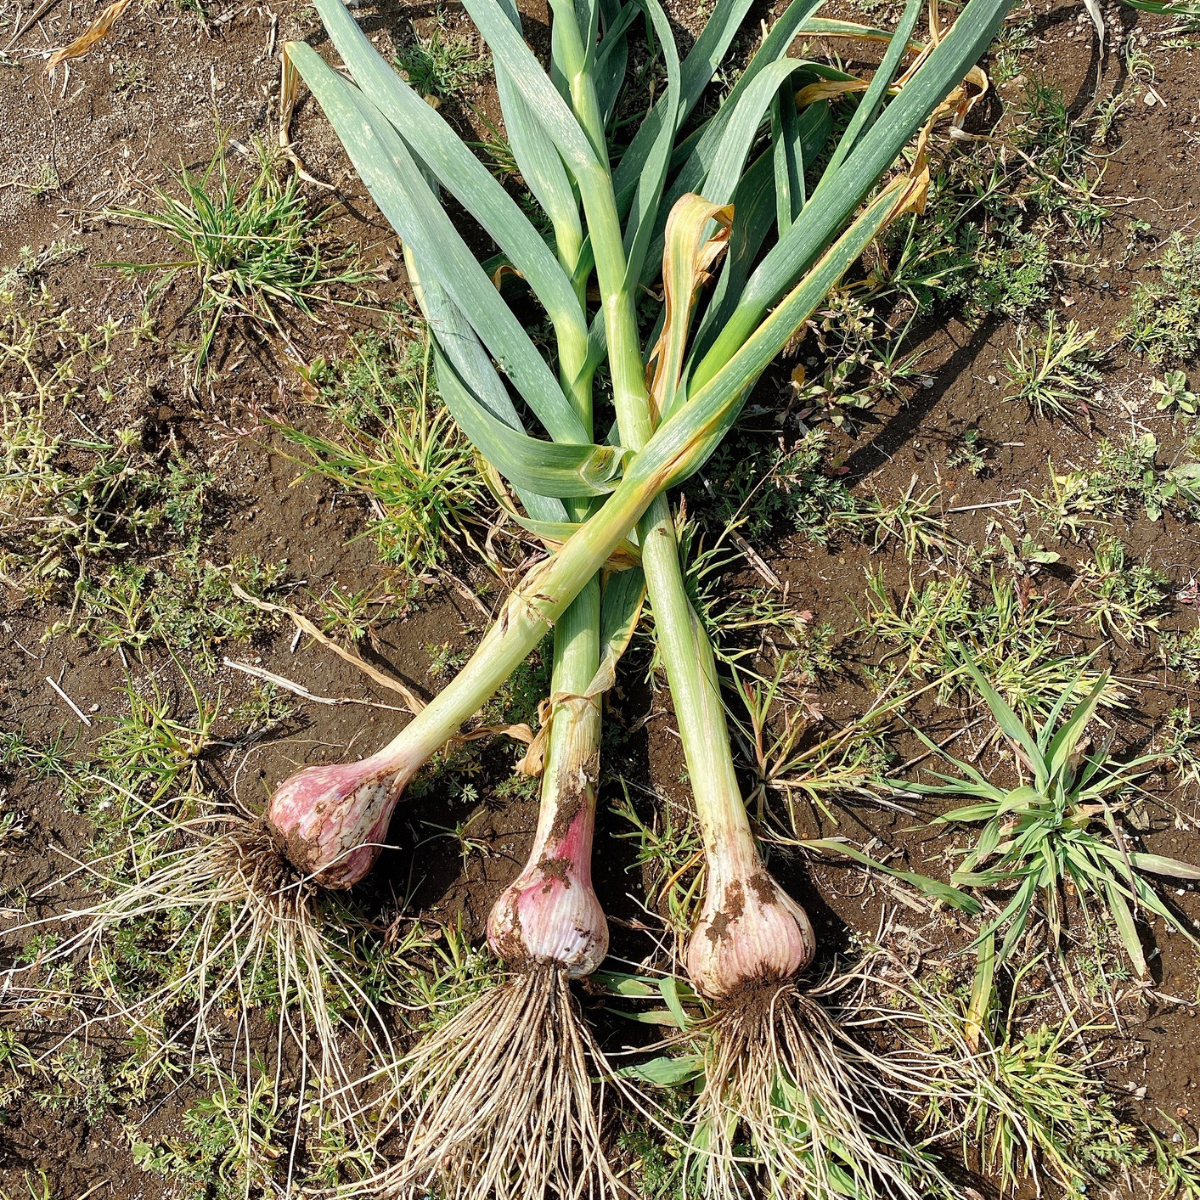 Three garlic plants placed on field